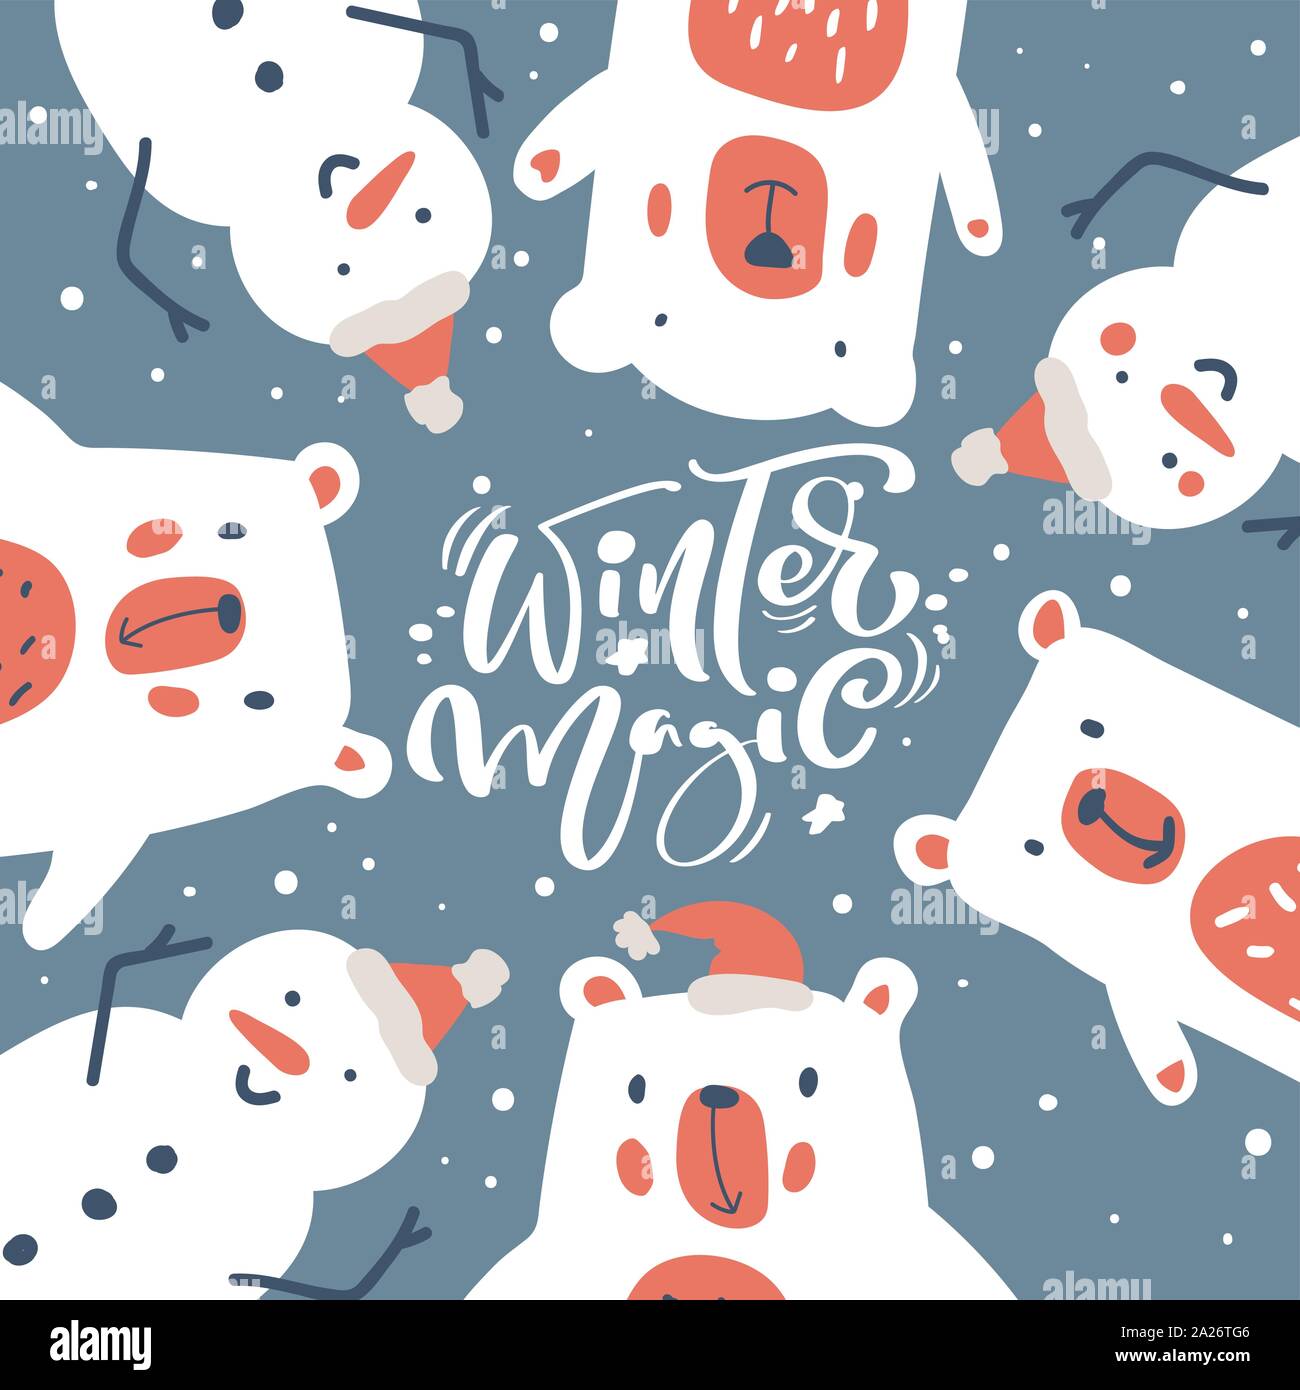 Christmas greeting card design with snowman and polar bear. Winter Magic calligraphic lettering hand written text. Modern winter season postcard Stock Vector